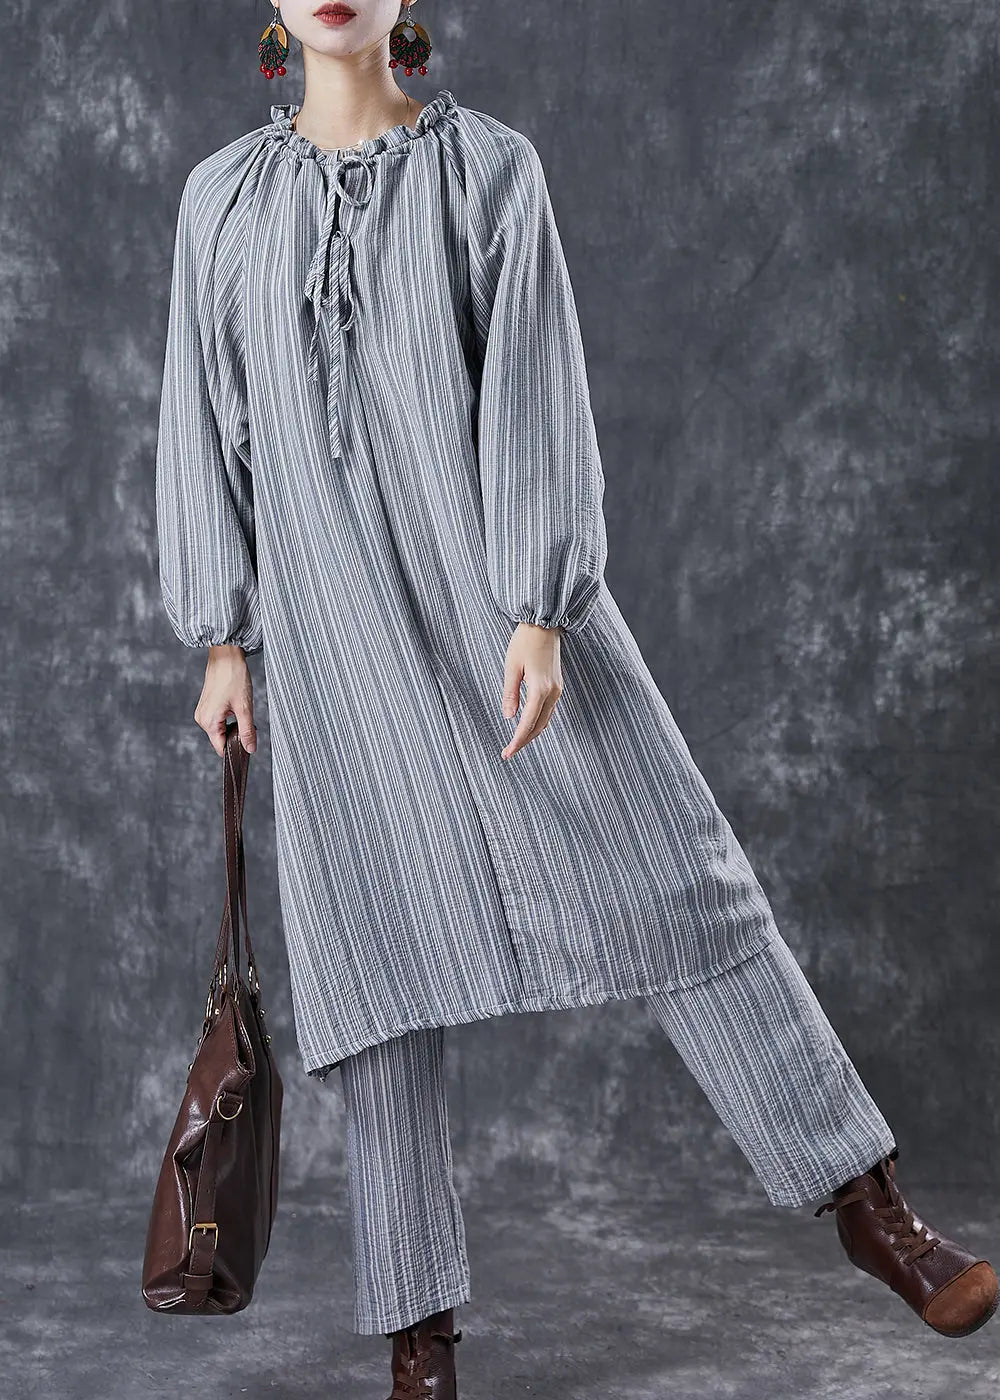 Organic Grey Ruffled Striped Cotton Dress Two Piece Suit Set Fall Ada Fashion